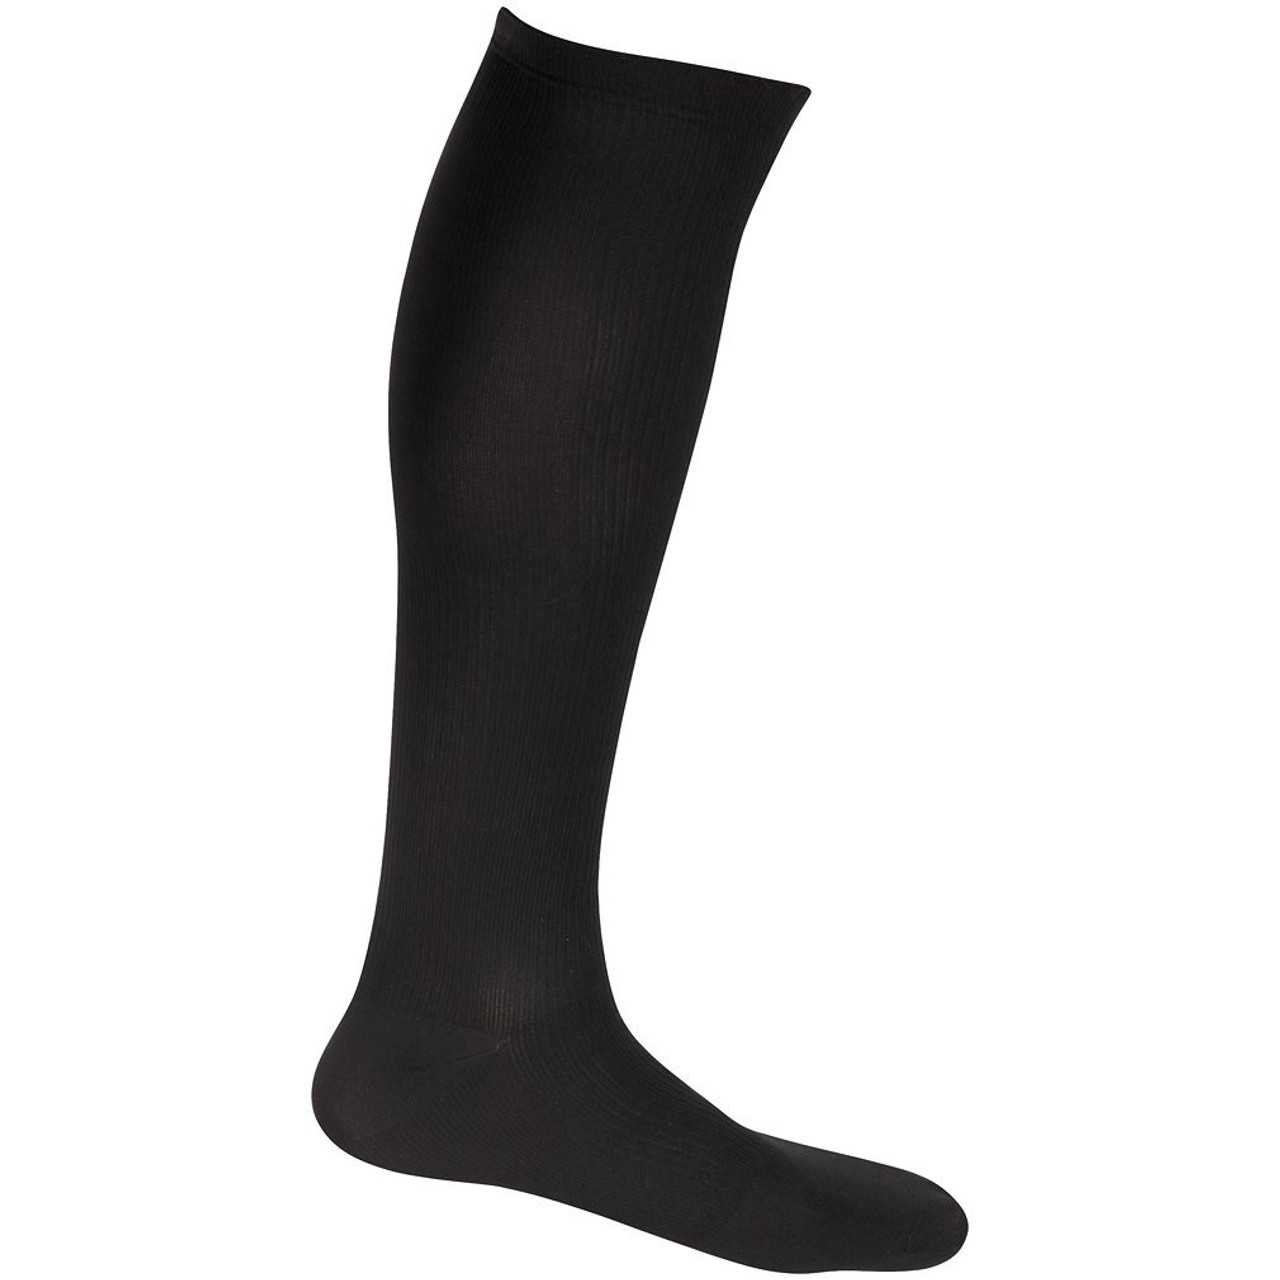 EvoNation Men's USA Made Graduated Compression Socks 30-40 mmHg Extra ...